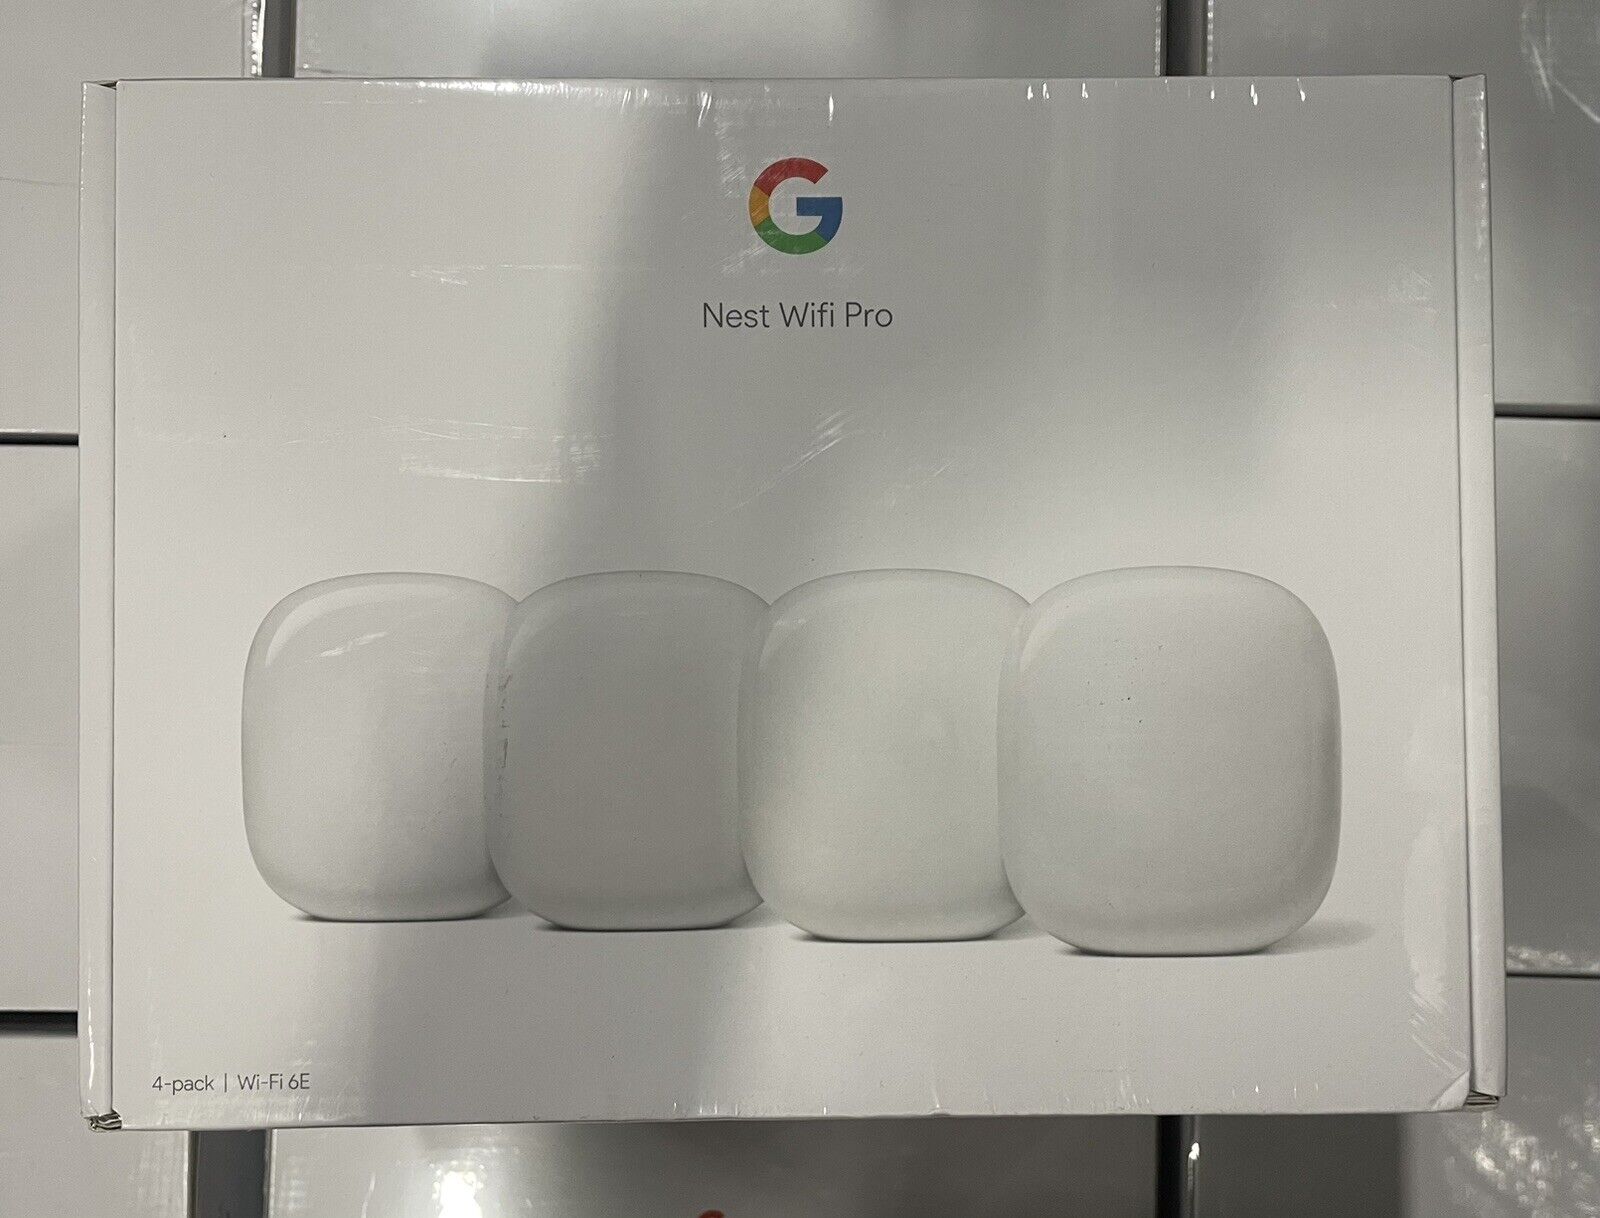 Google Nest Wifi Pro, Wi-Fi 6E, 4-pack White GA03691-US New Sealed in Box